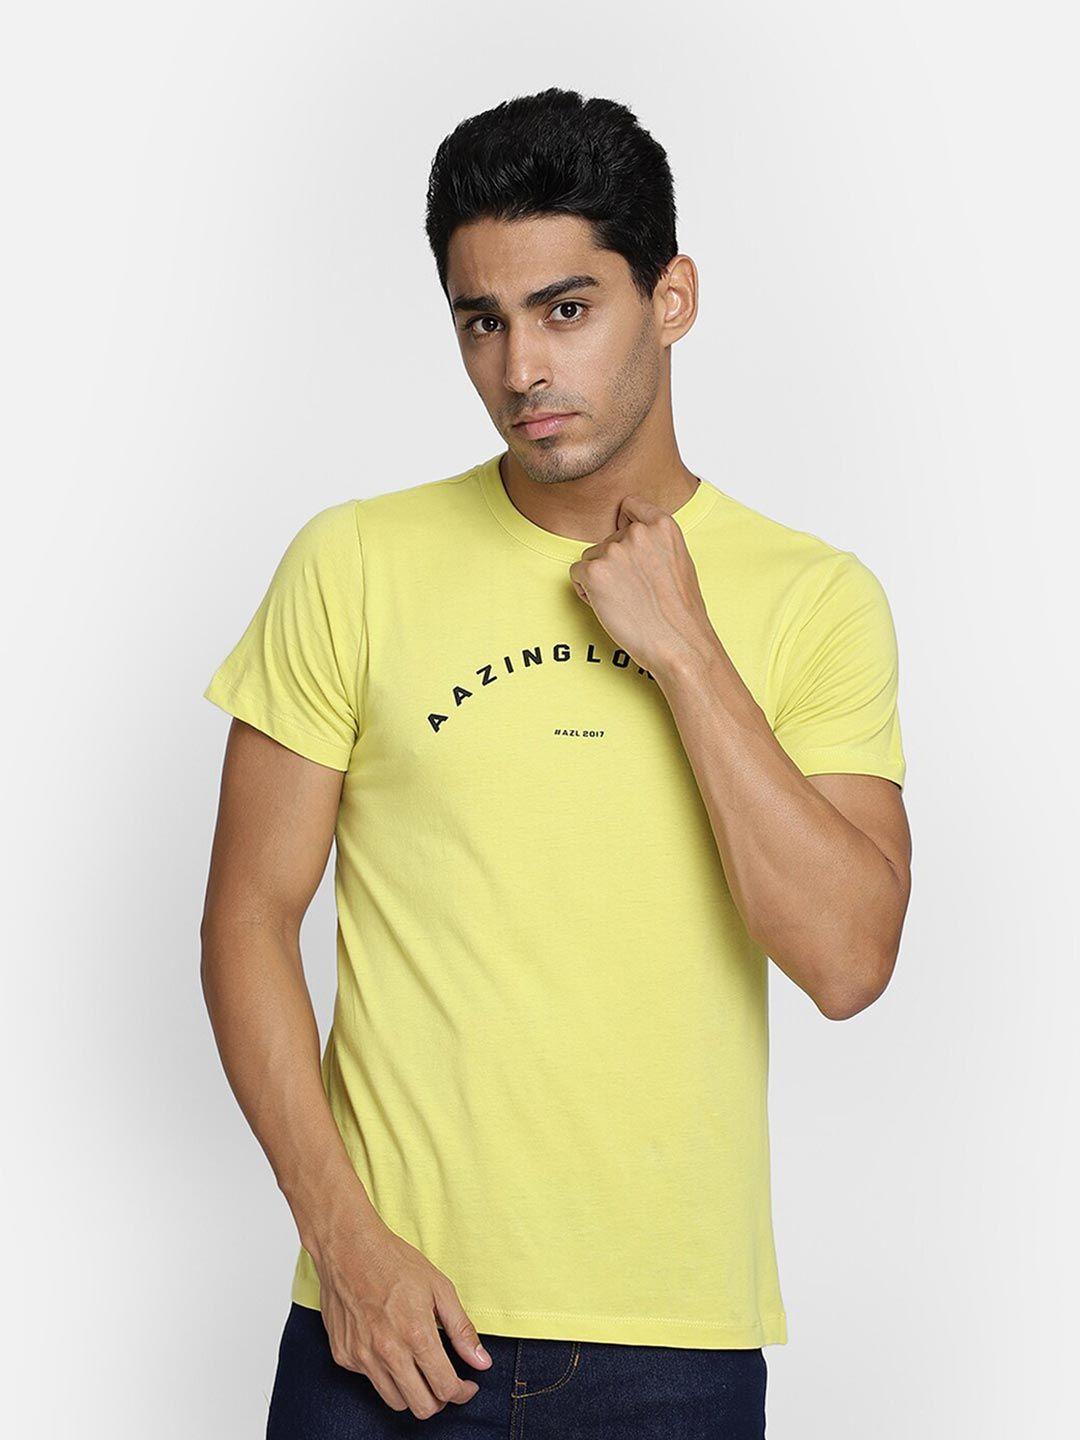 aazing london men yellow typography printed t-shirt